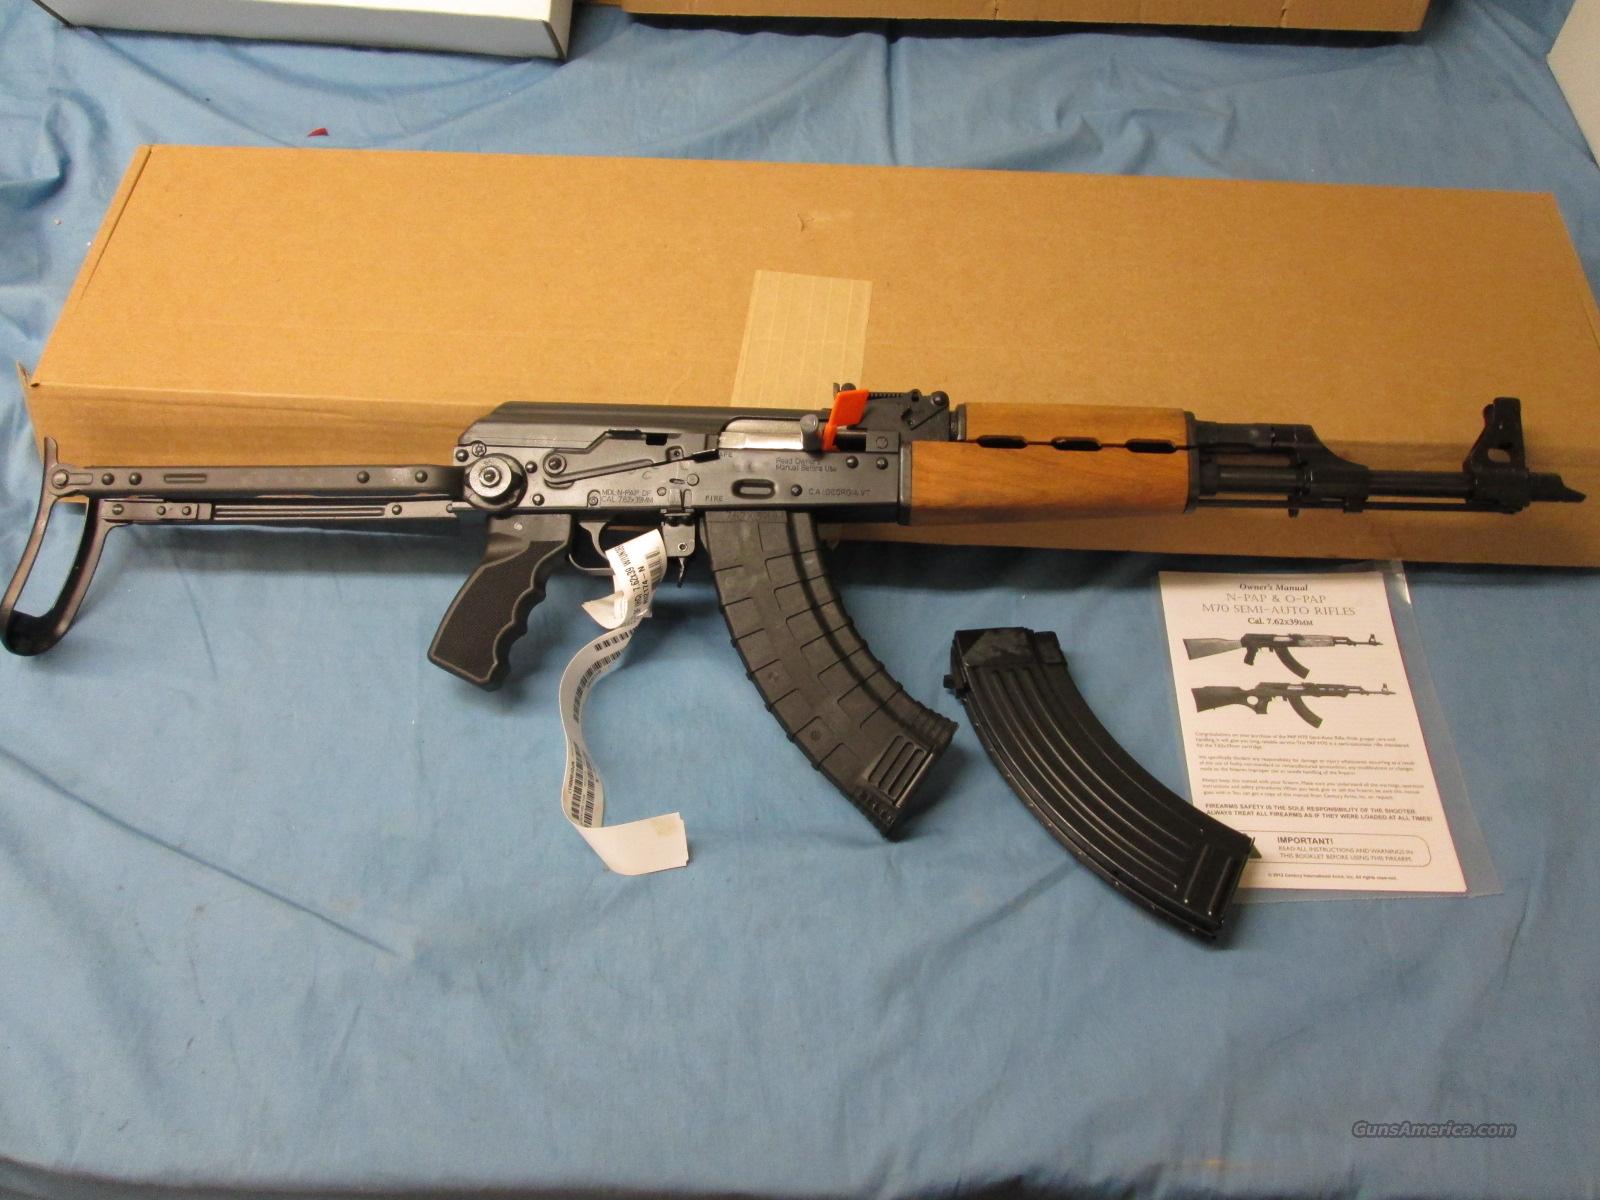 Zastava N-Pap DF AK-47 Underfolder for sale.